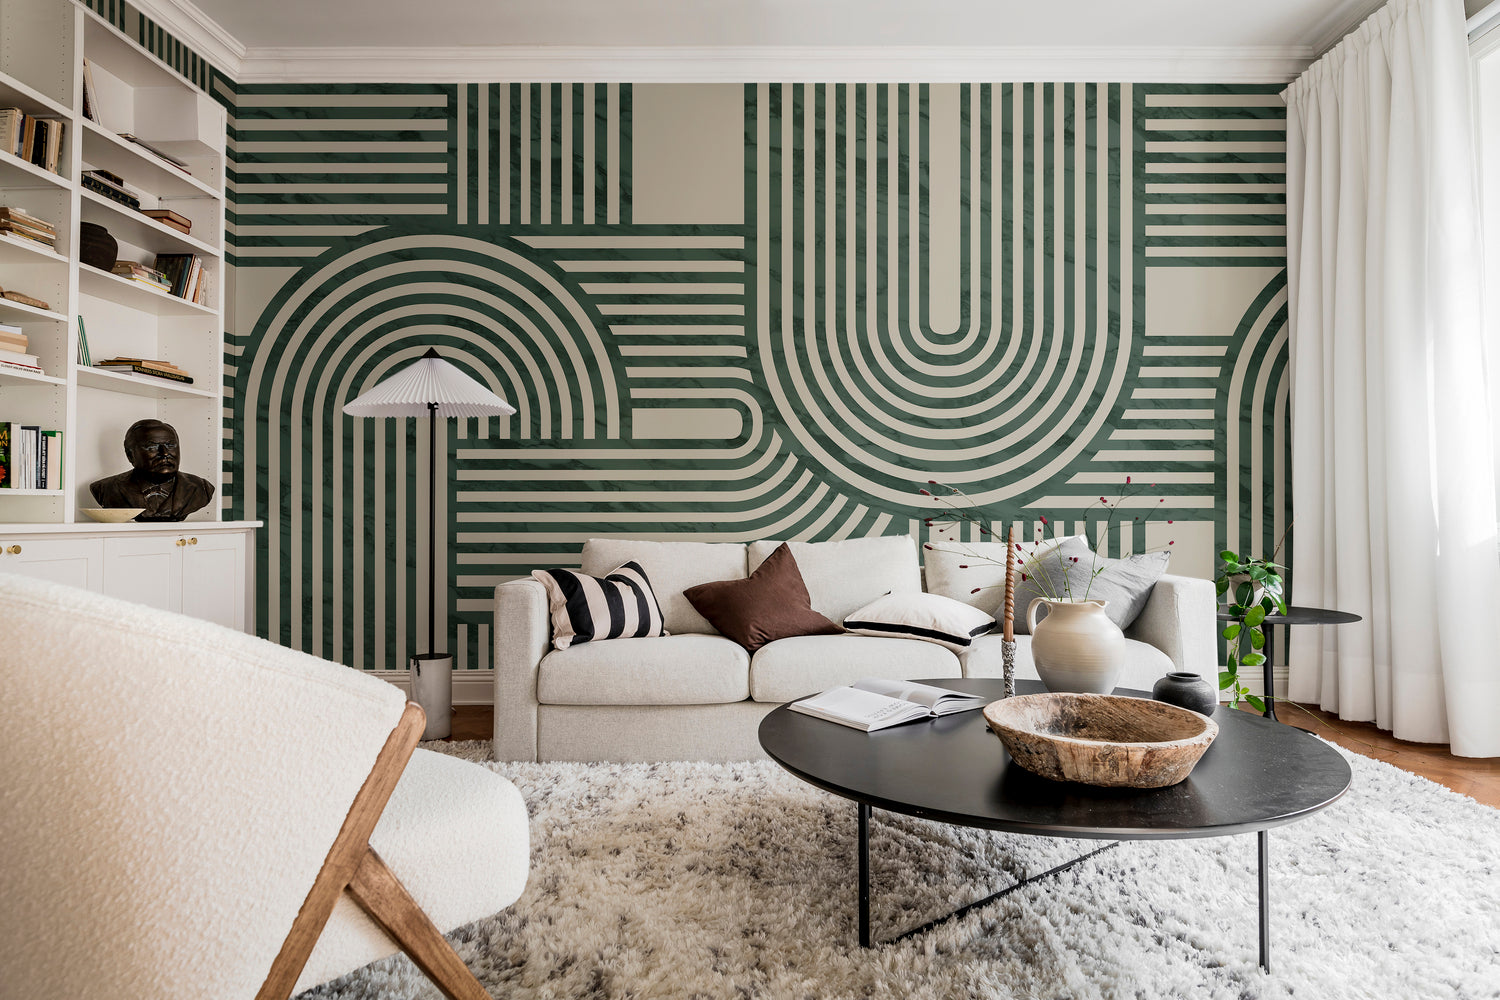 Stella Arch, Geometric Mural Wallpaper in living room